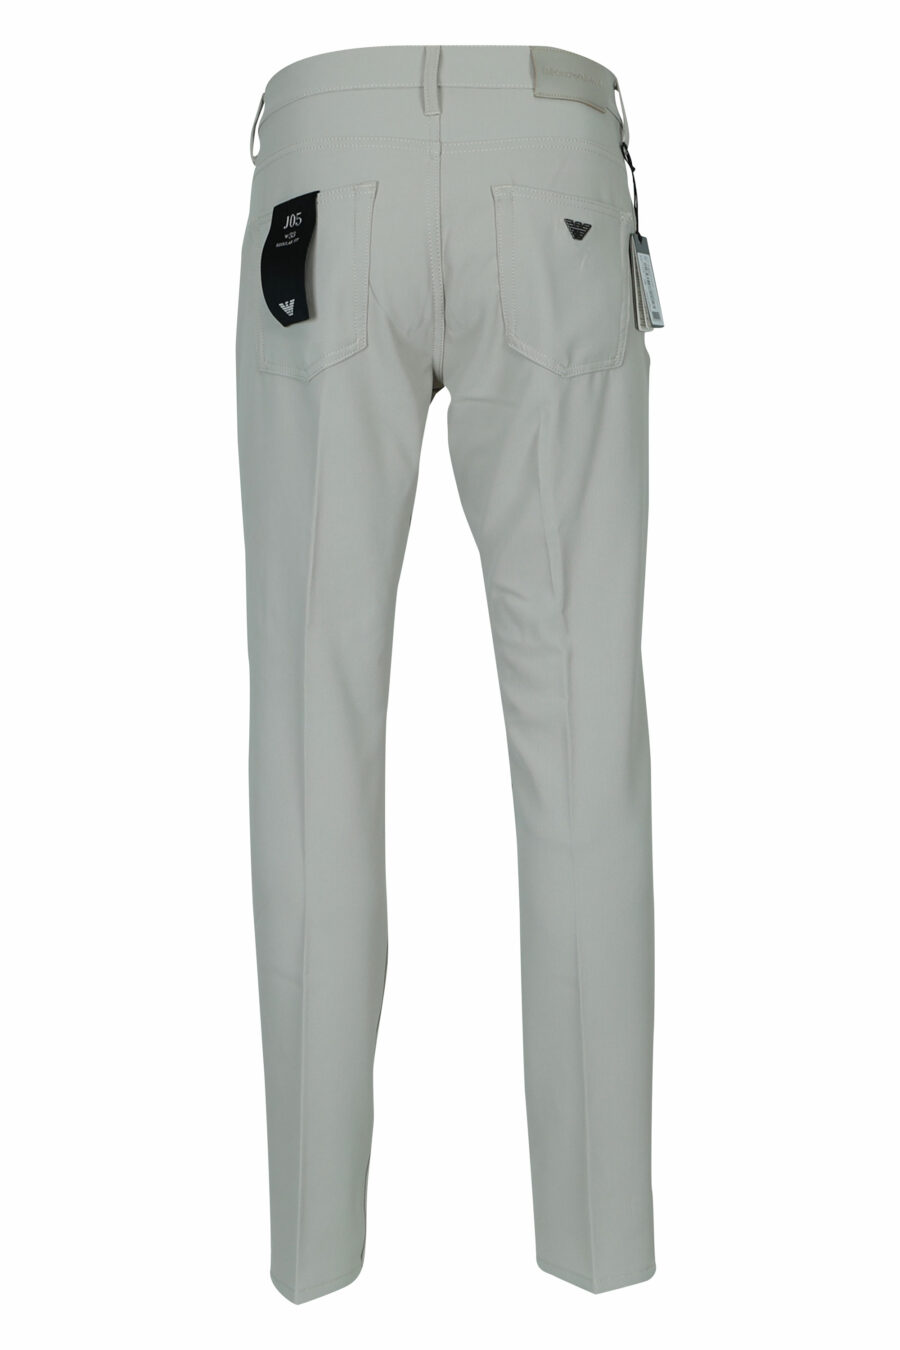 Beige trousers with metal eagle mini logo - 8058947055913 2